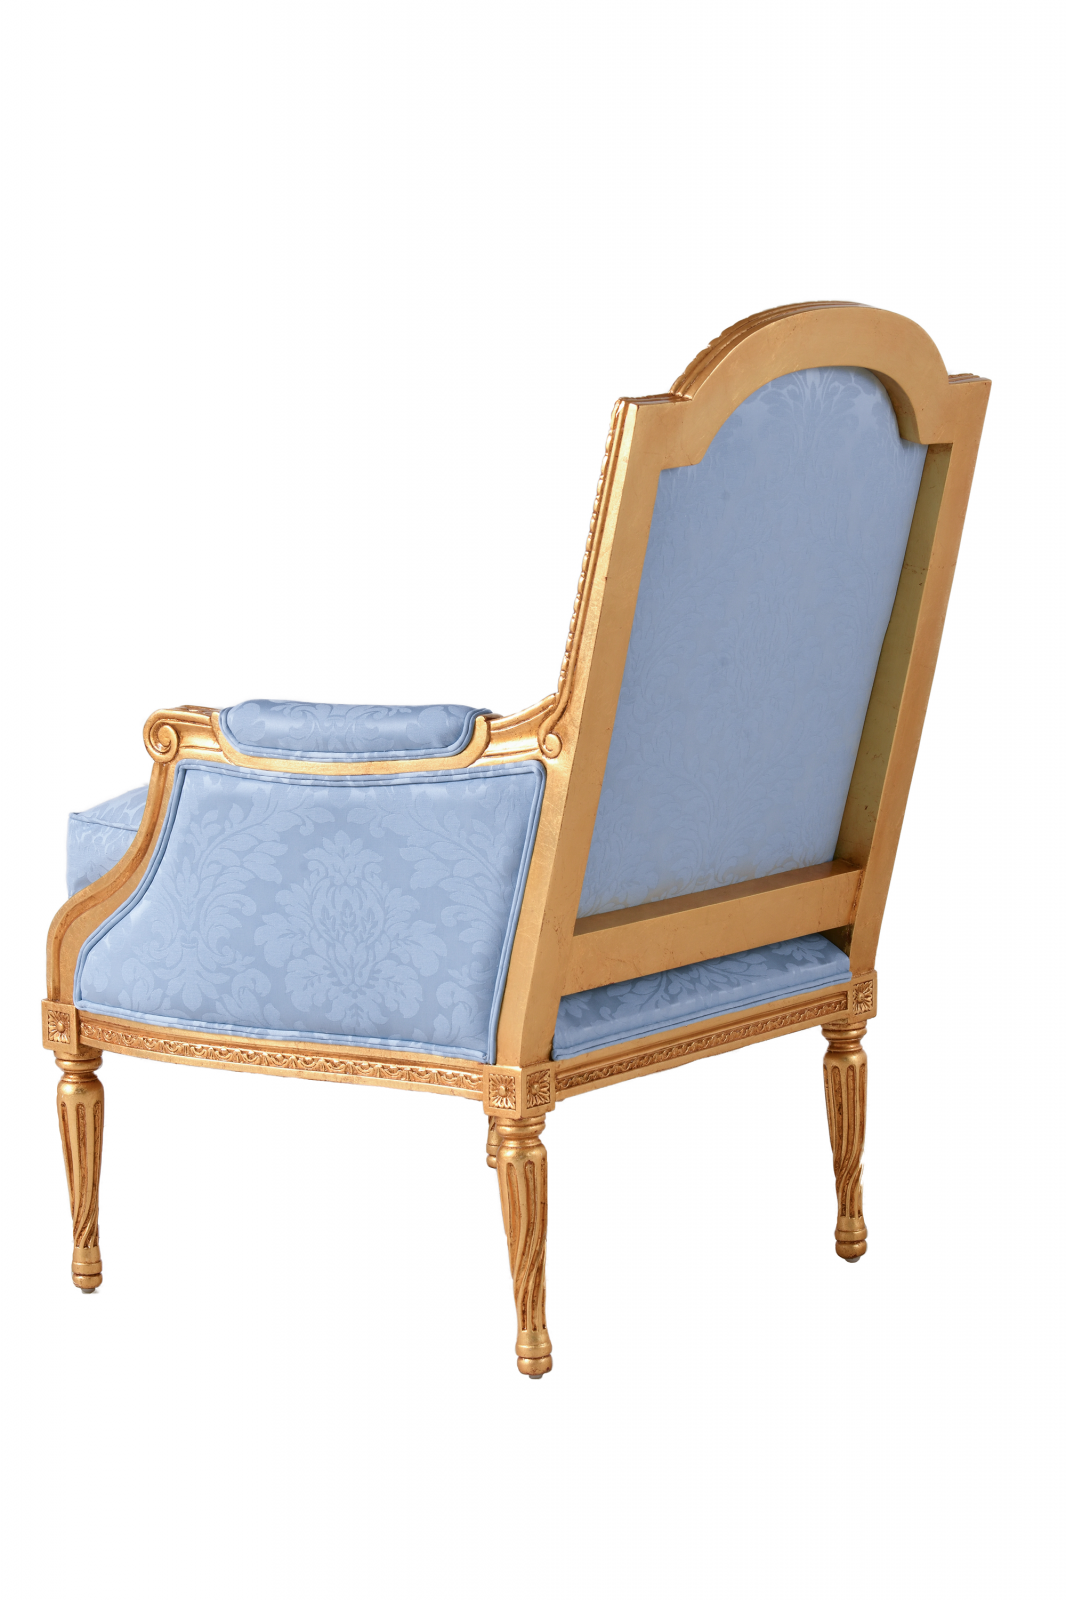 Alexander Chair in gold in lymington damask sky blue